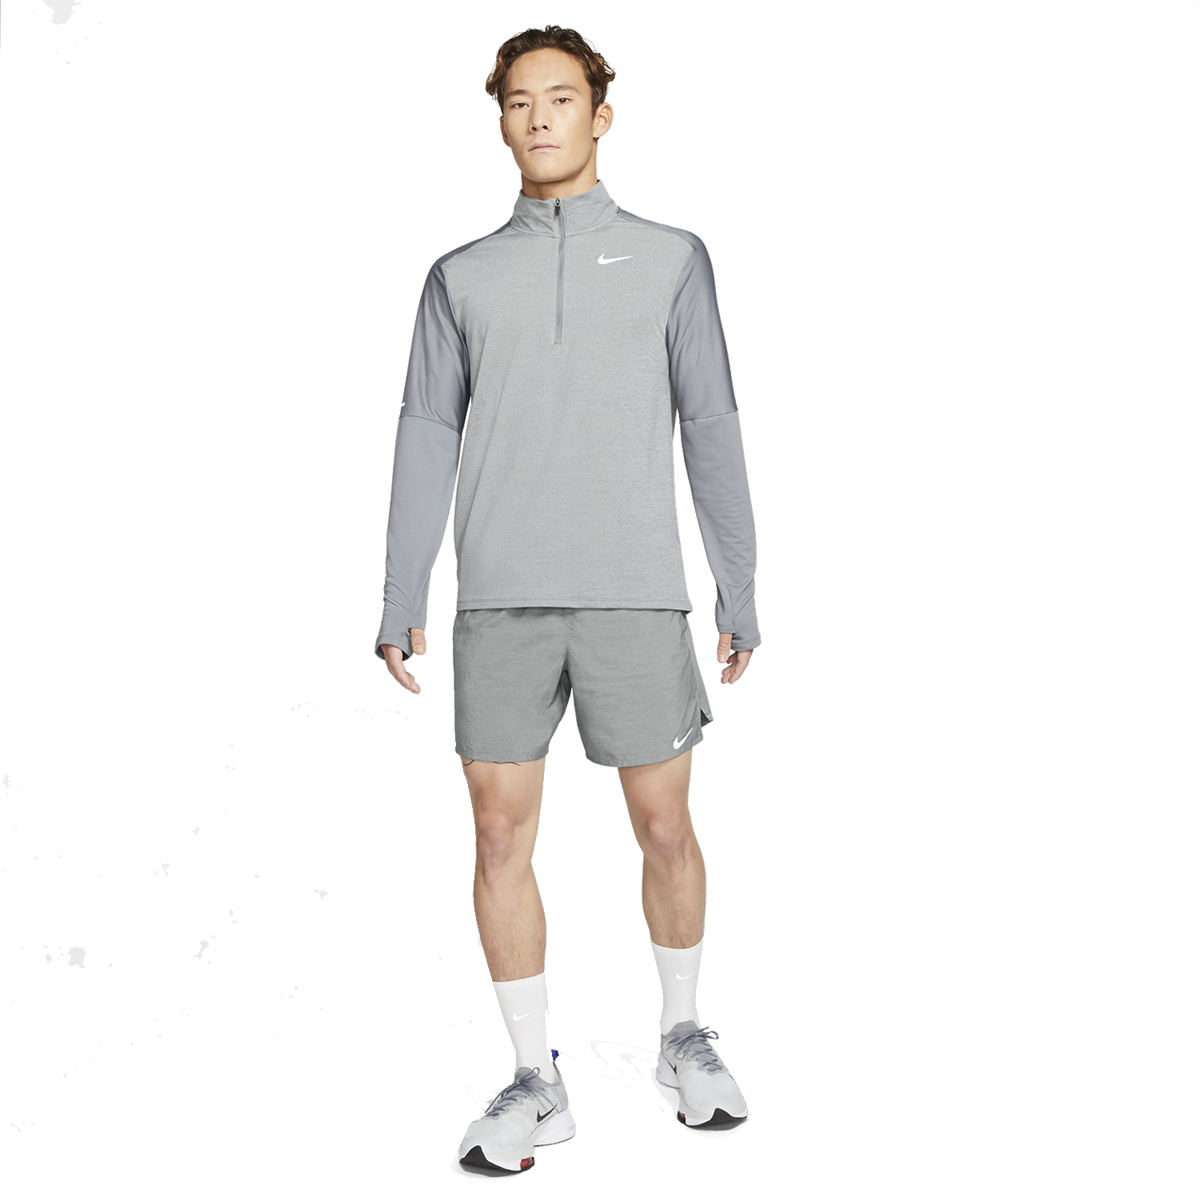 Nike Challenger Short, , large image number null